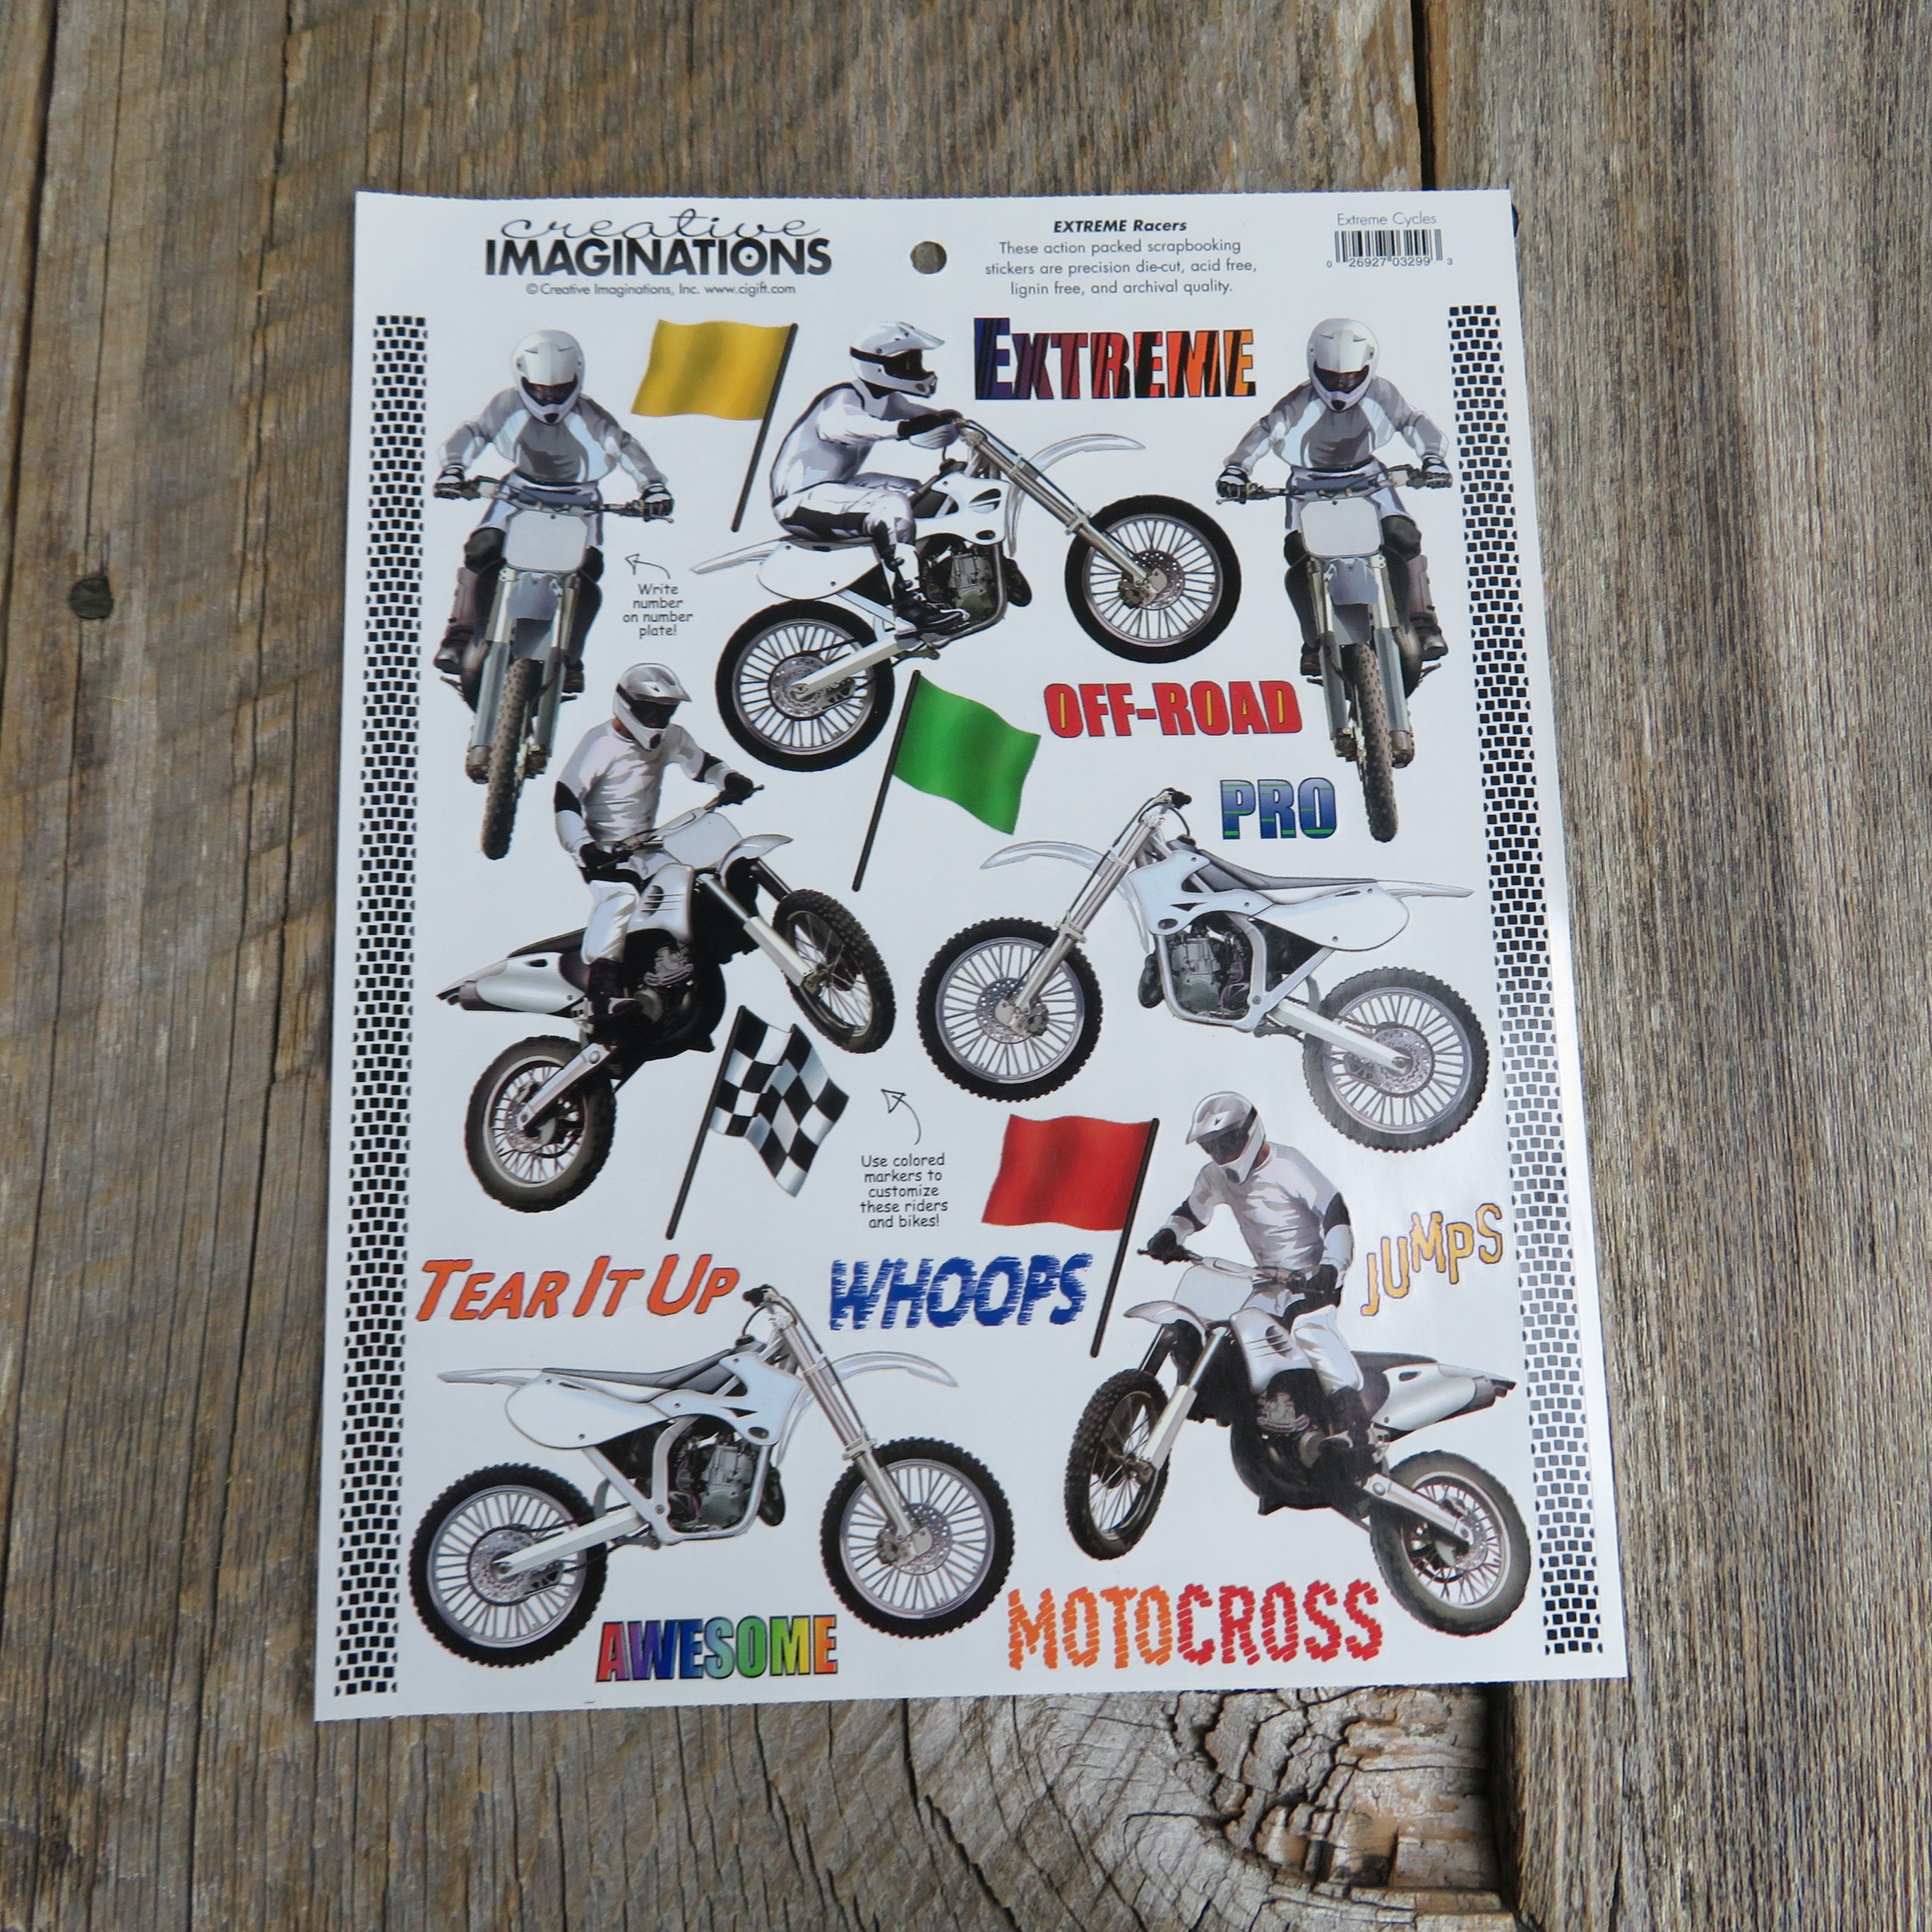 Sticker Extreme Motocross - Autocollant Extreme Motocross